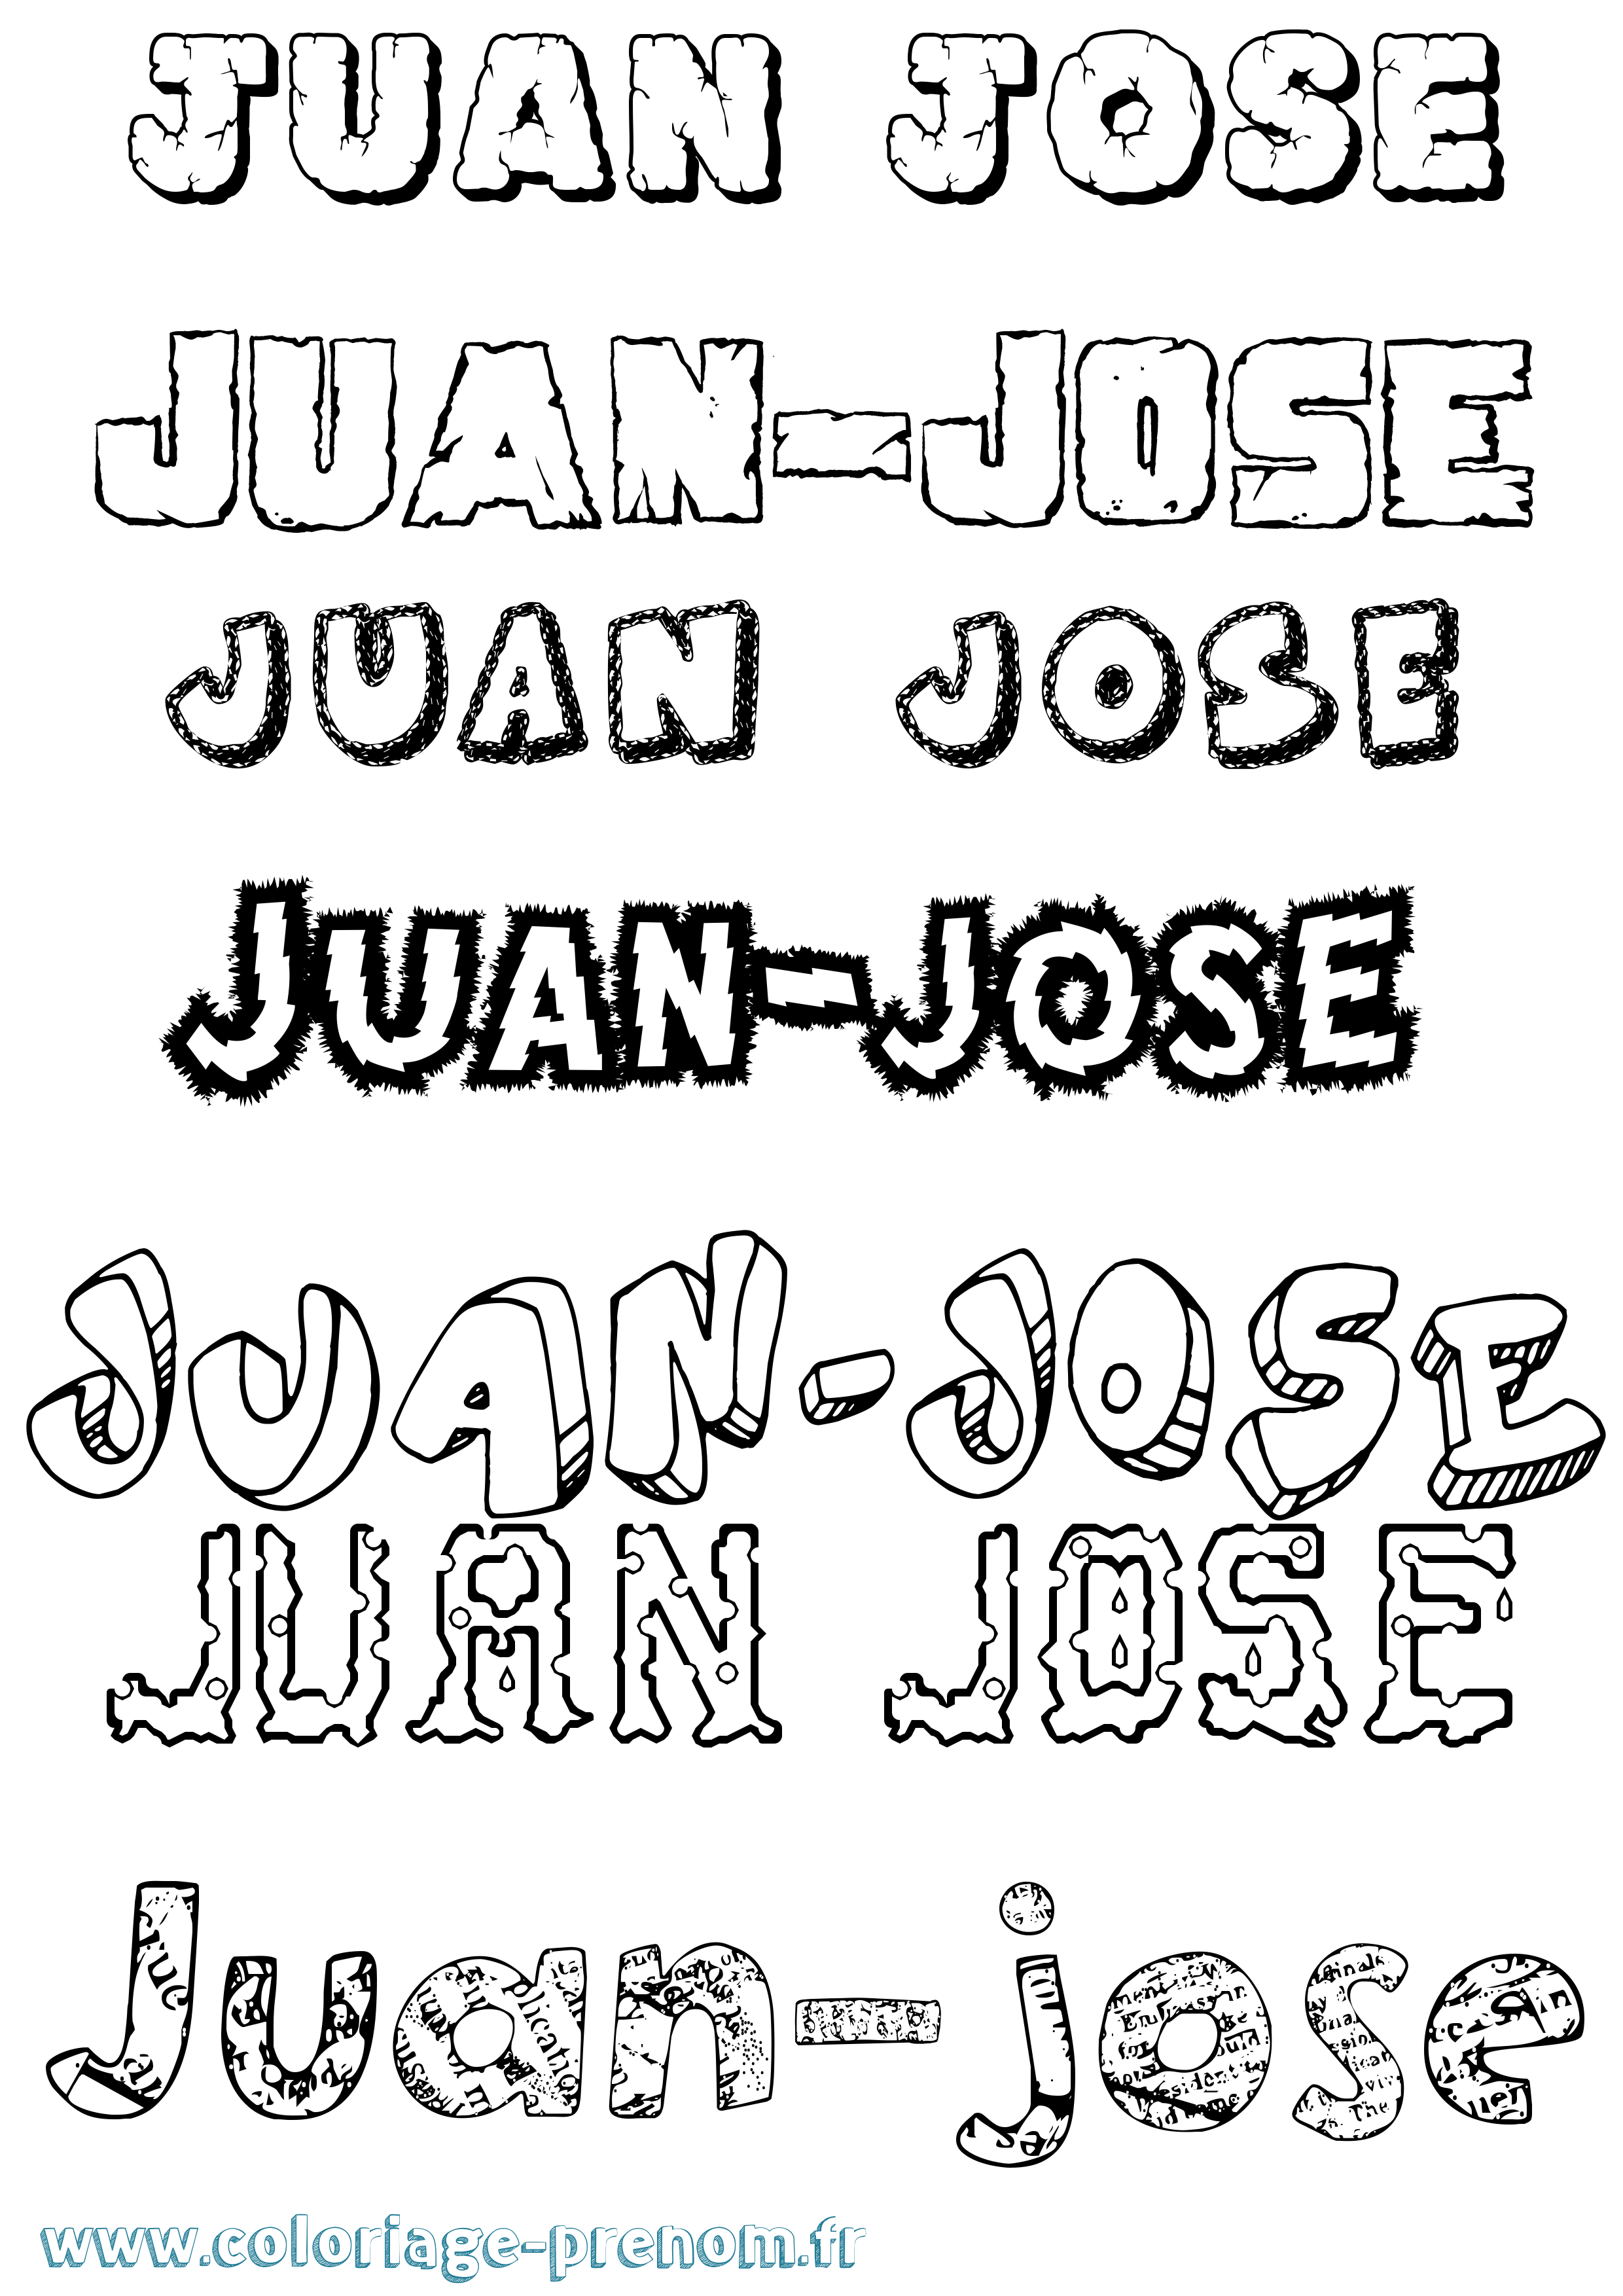 Coloriage prénom Juan-José Destructuré